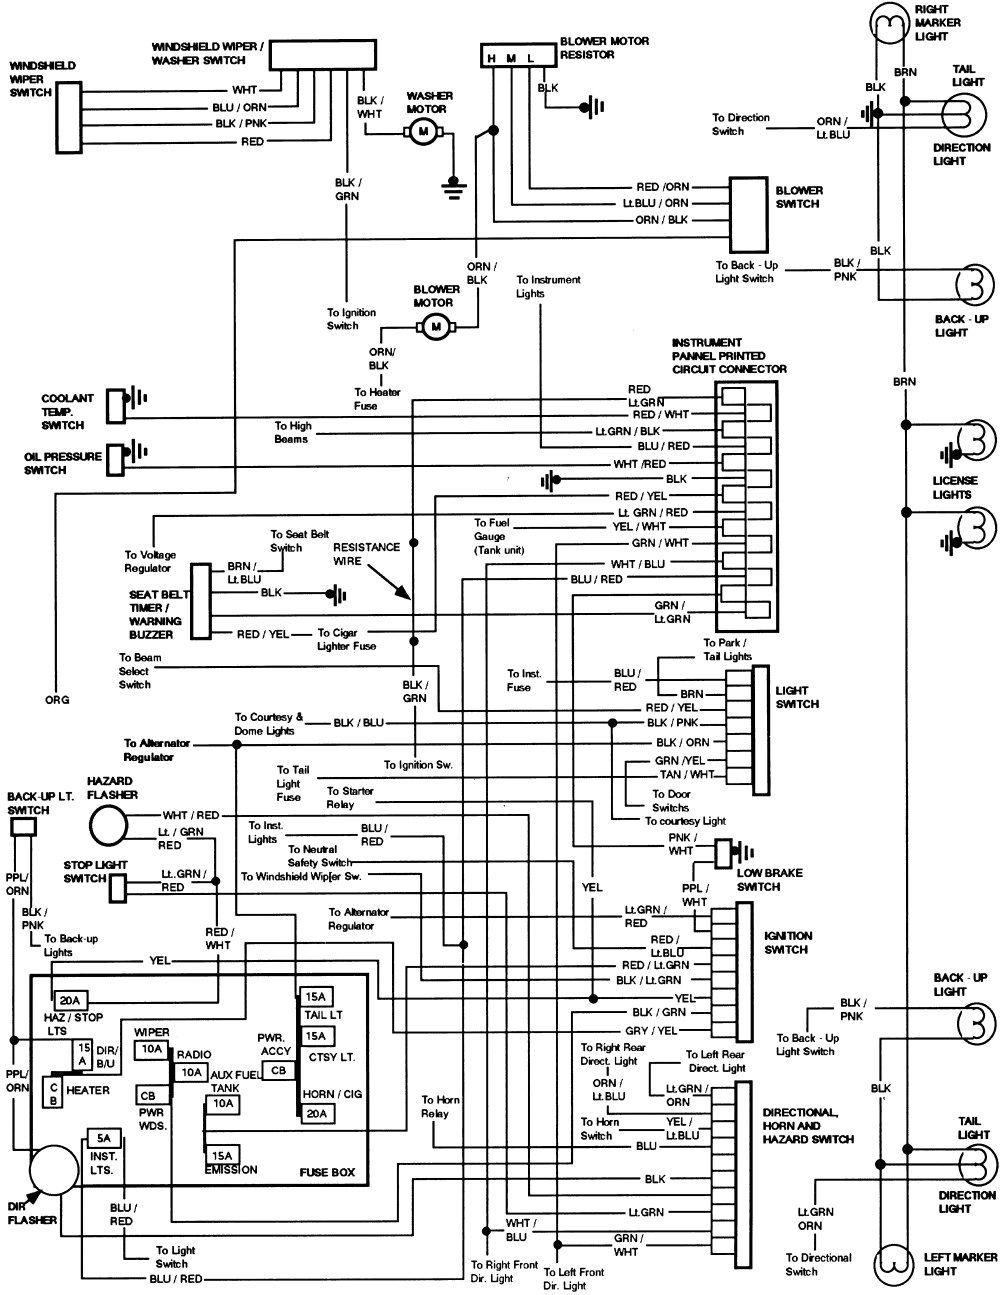 2003 f 250 wiring schematic wiring diagram blog 2003 ford super duty wiring diagram 2003 f250 super duty wiring diagrams